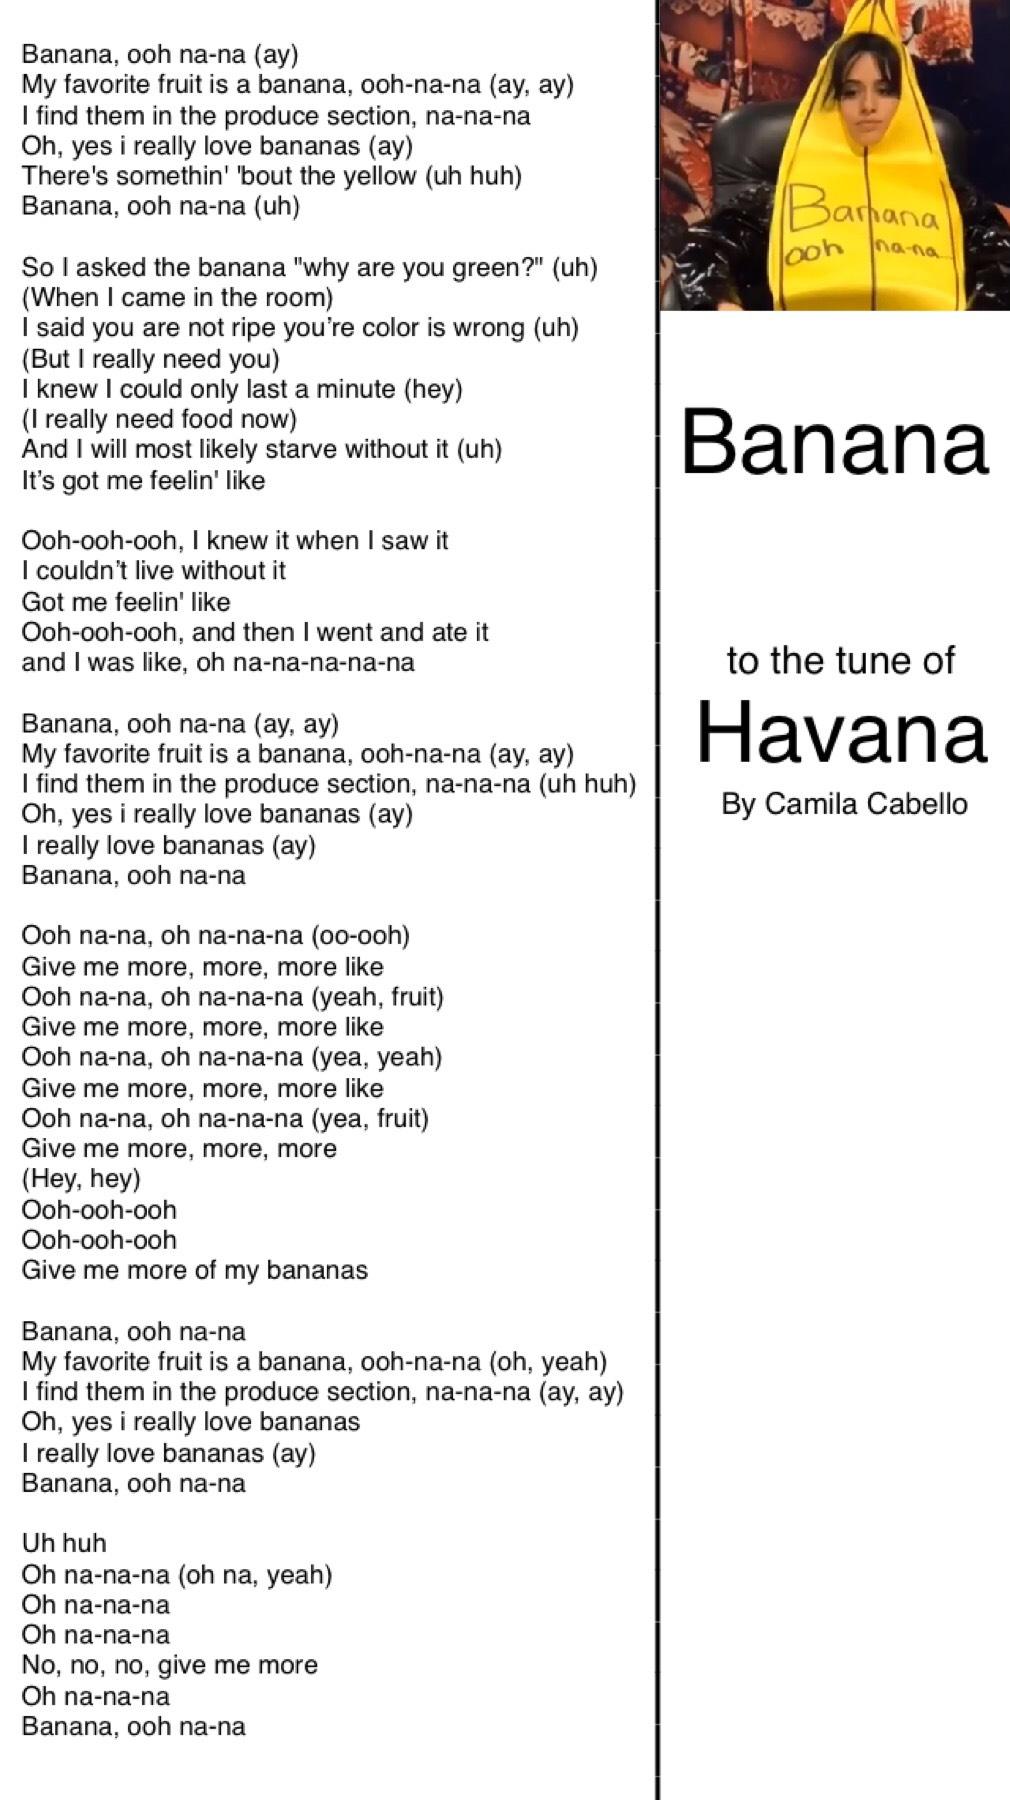 I actually really hate bananas